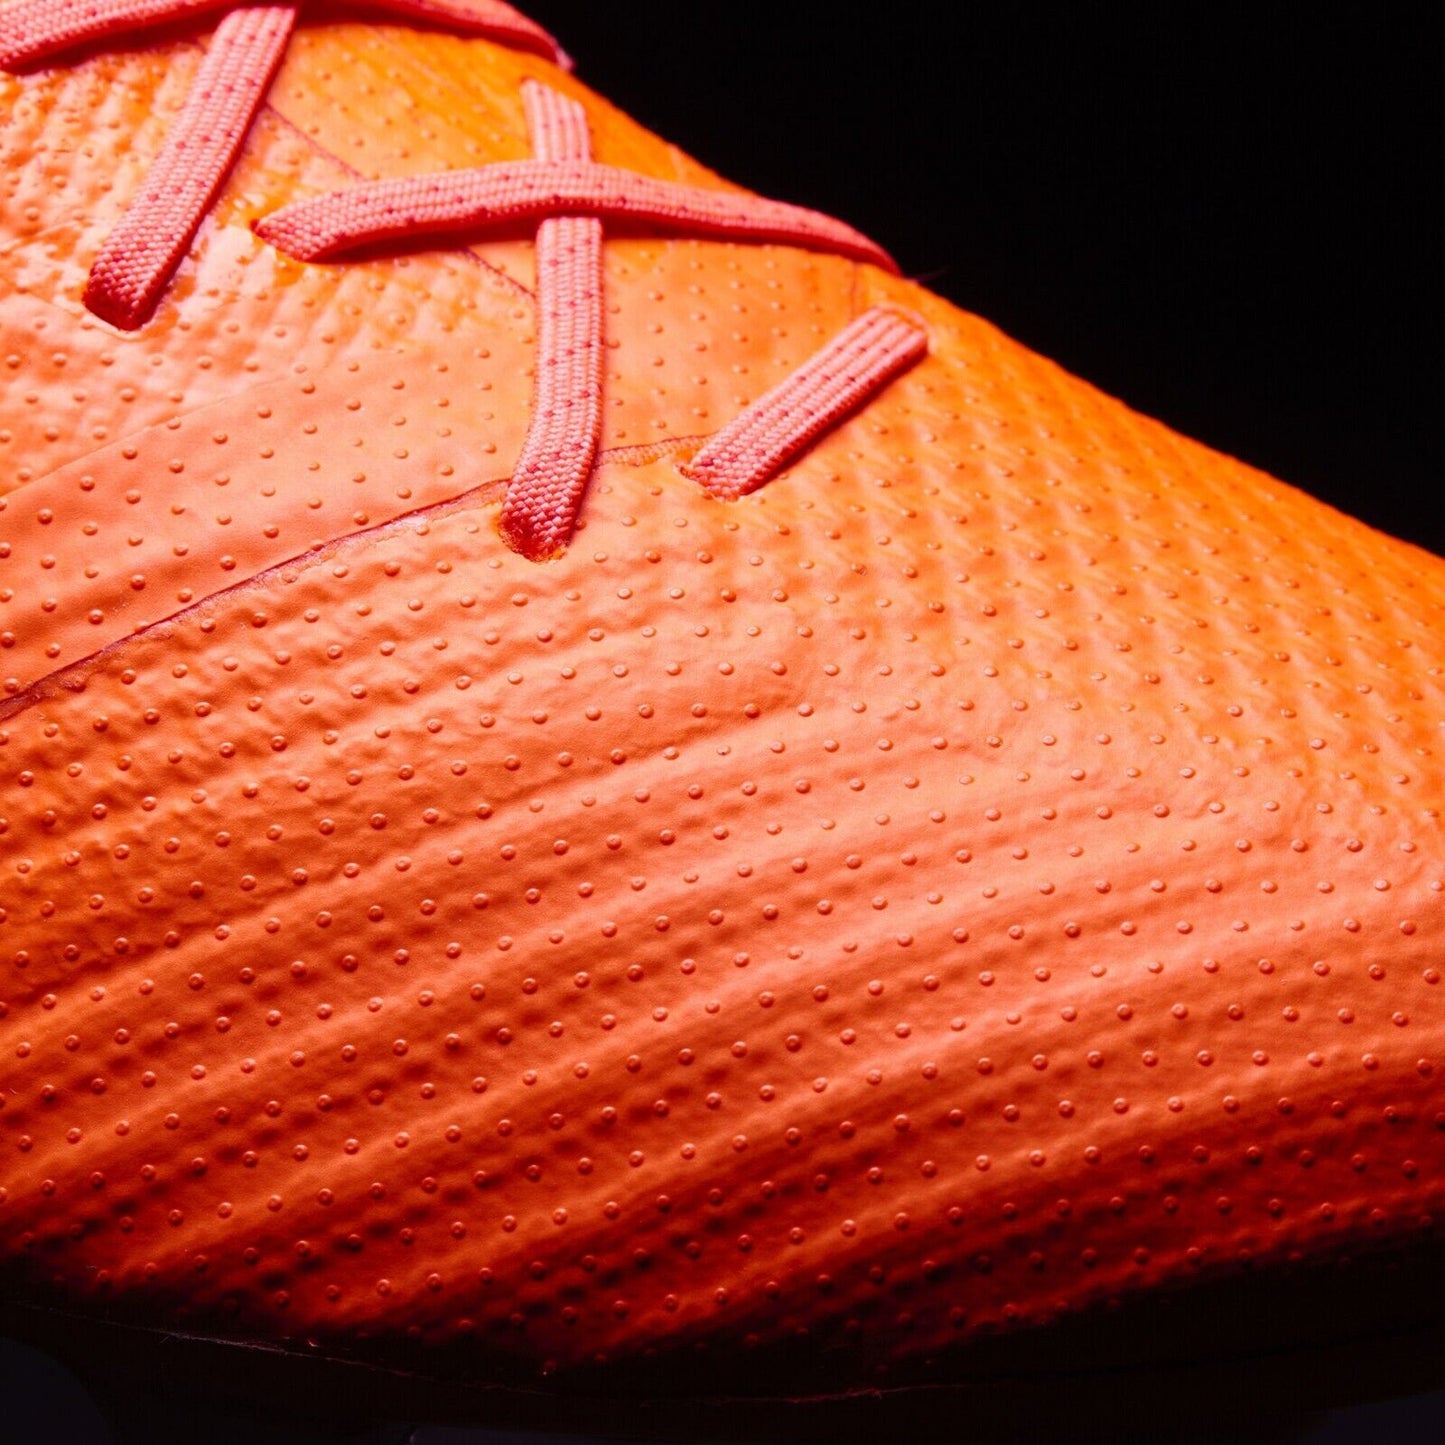 adidas Ace 17.1 SG Mens Football Boots - Solar Orange